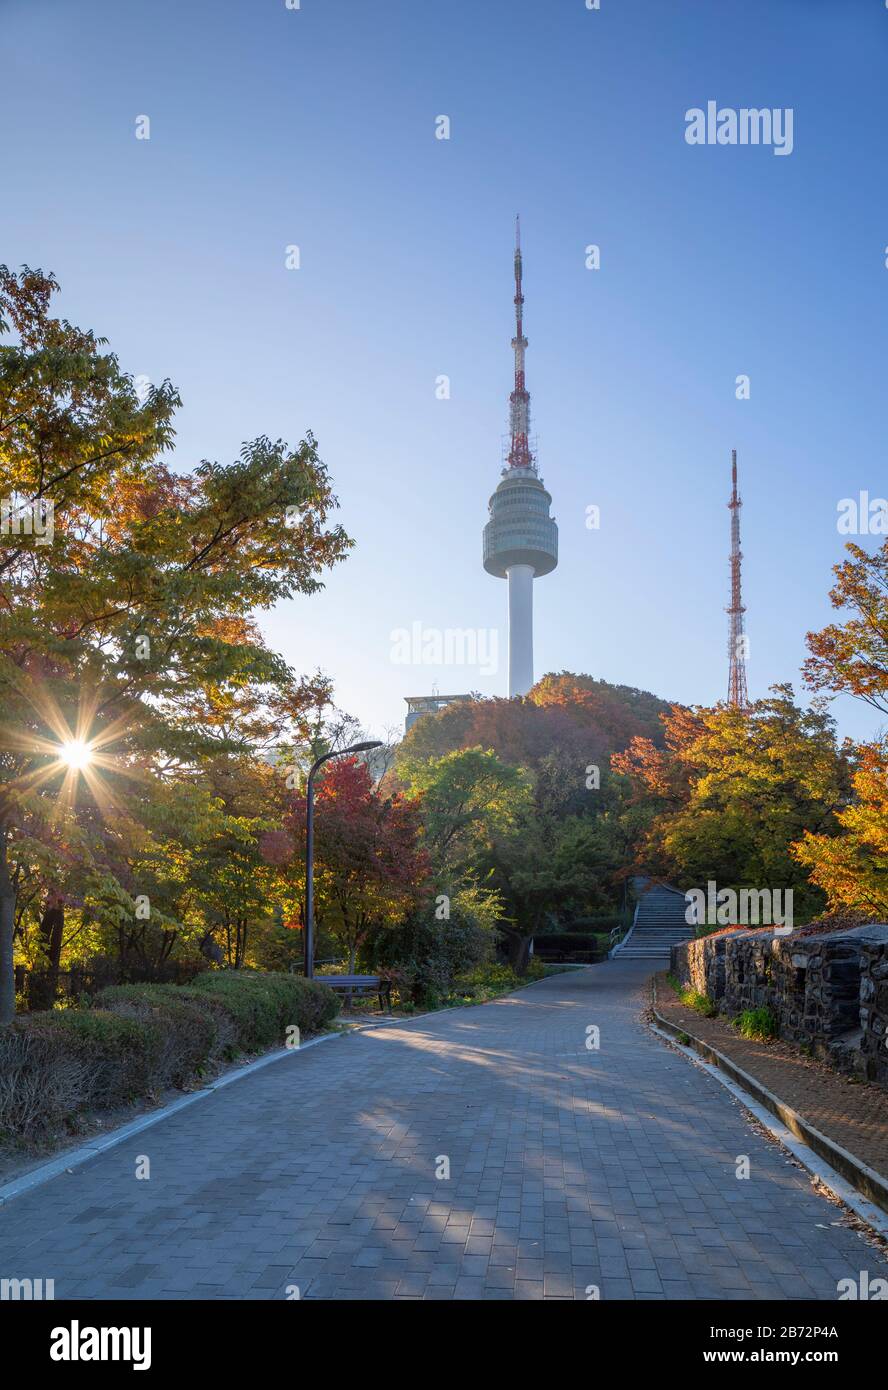 Seoul Tower in Namsan Park, South Korea Stock Photo